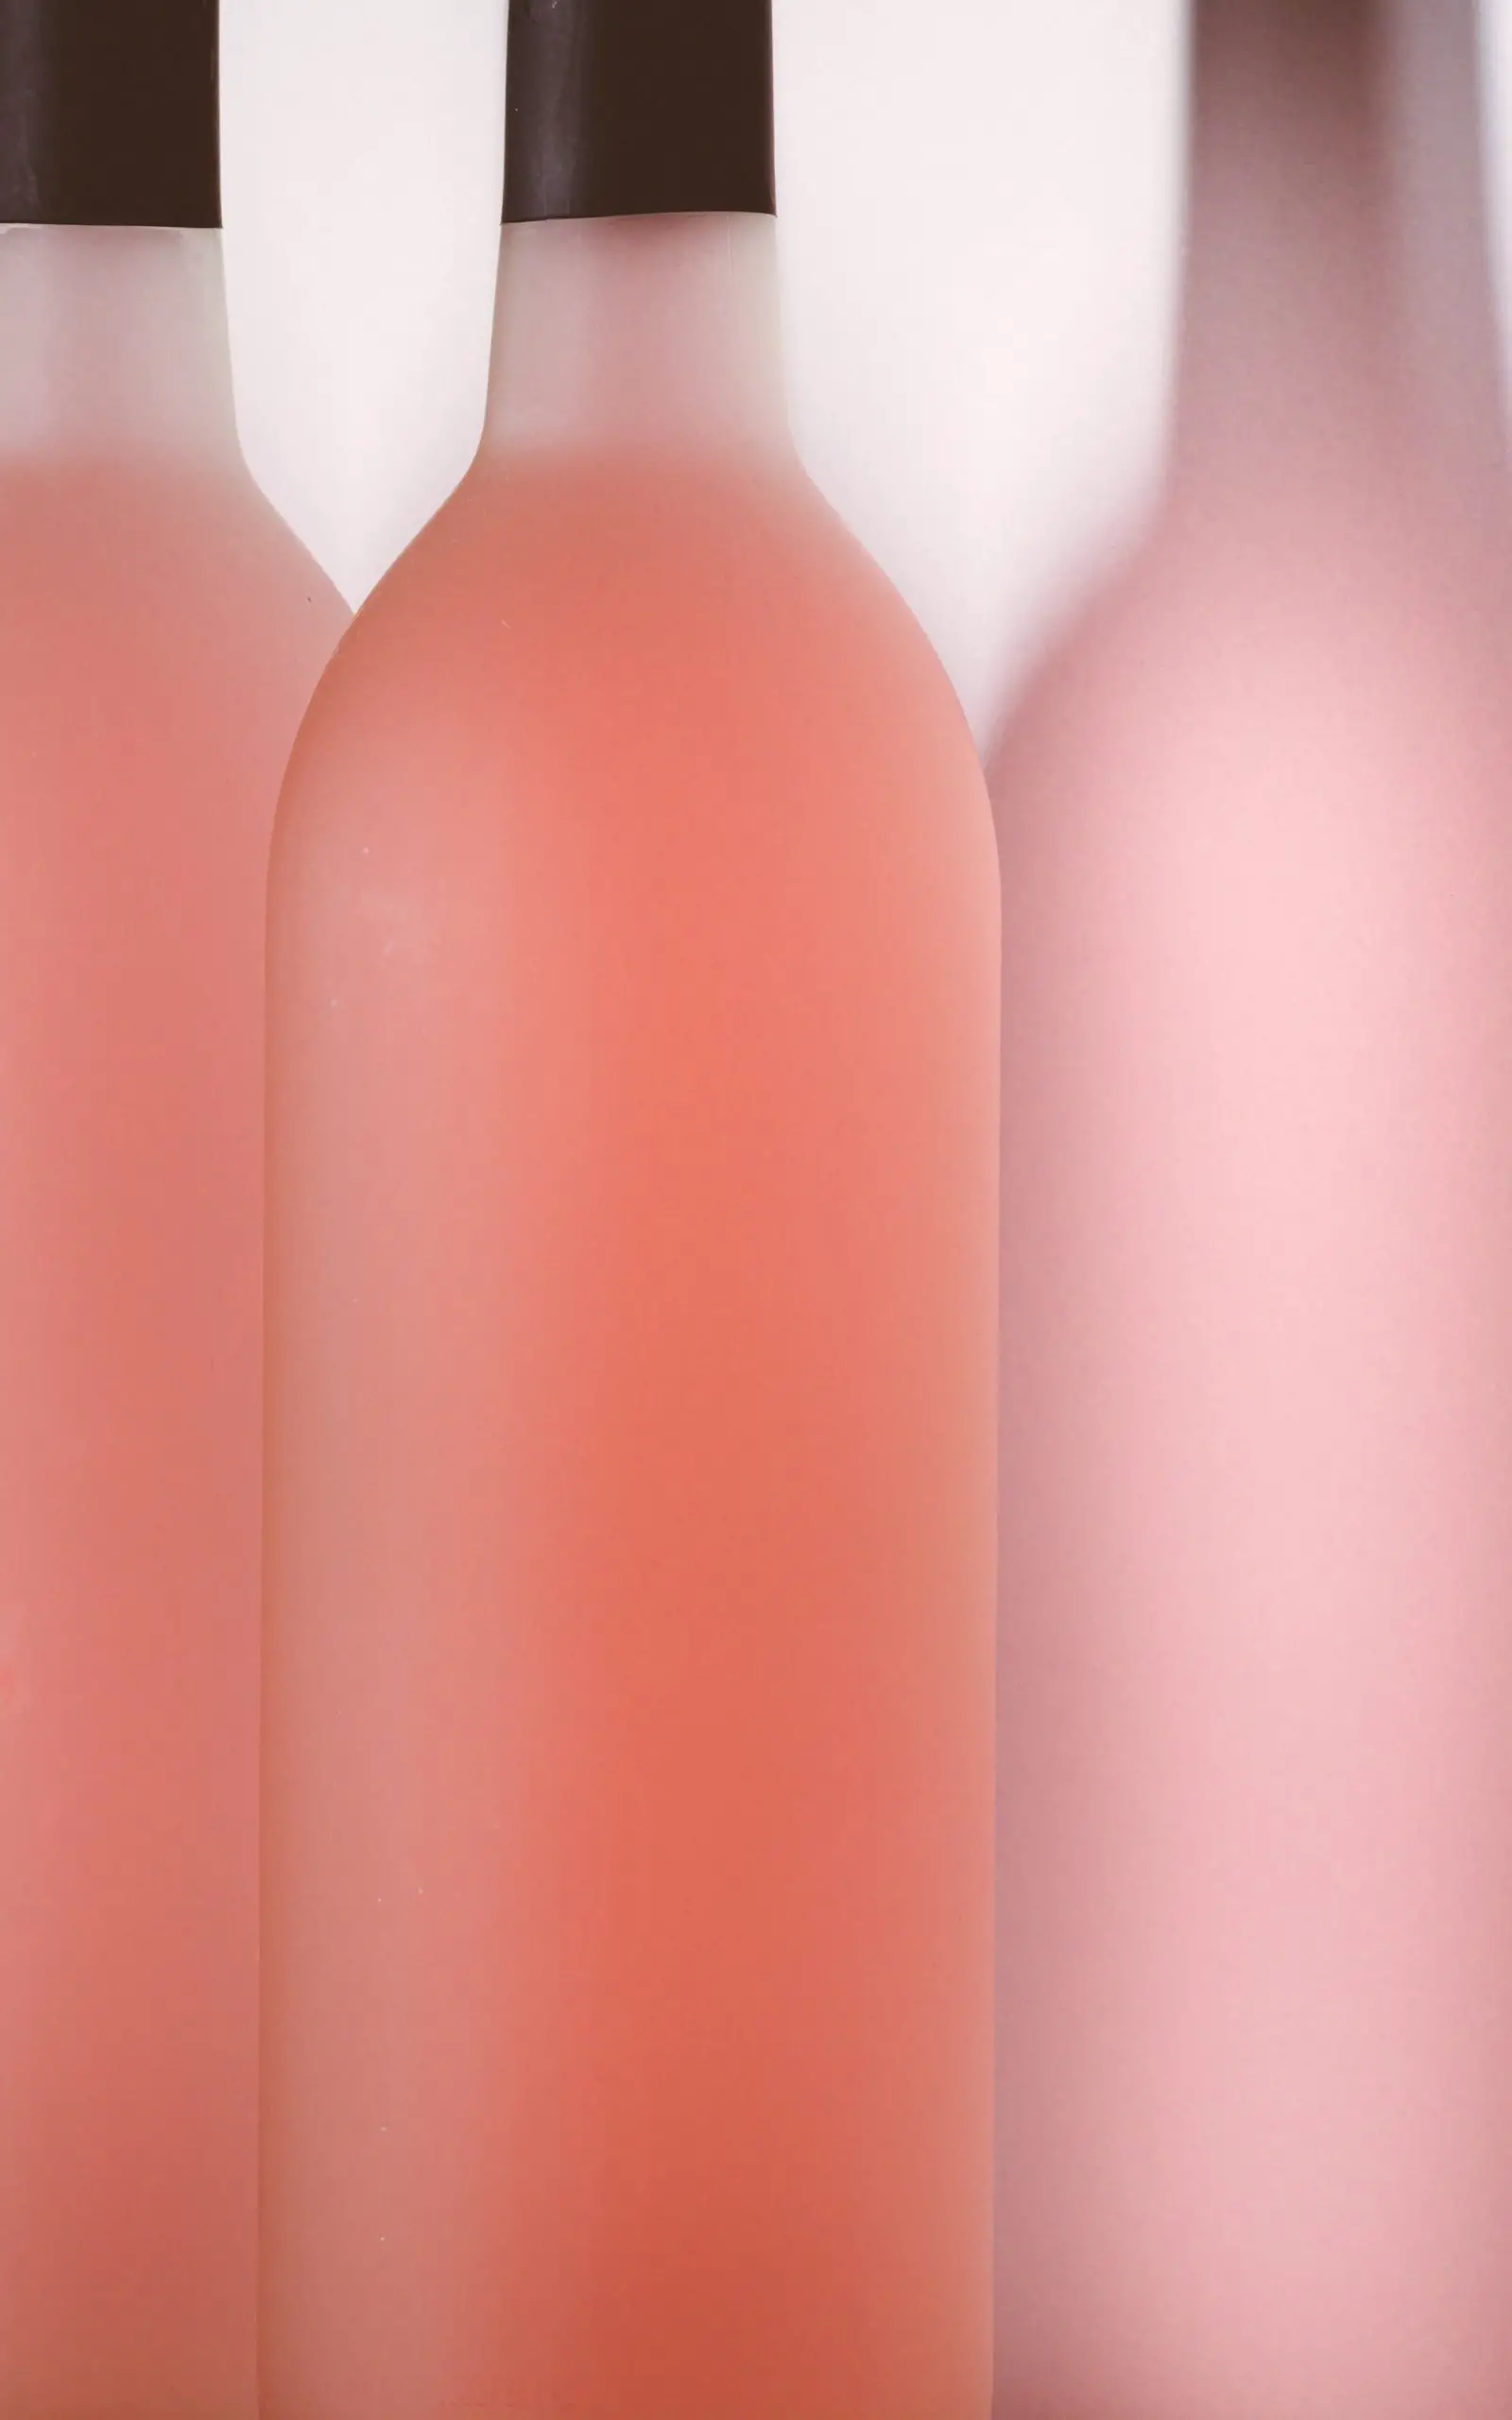 is rose sweet - pink wine bottles